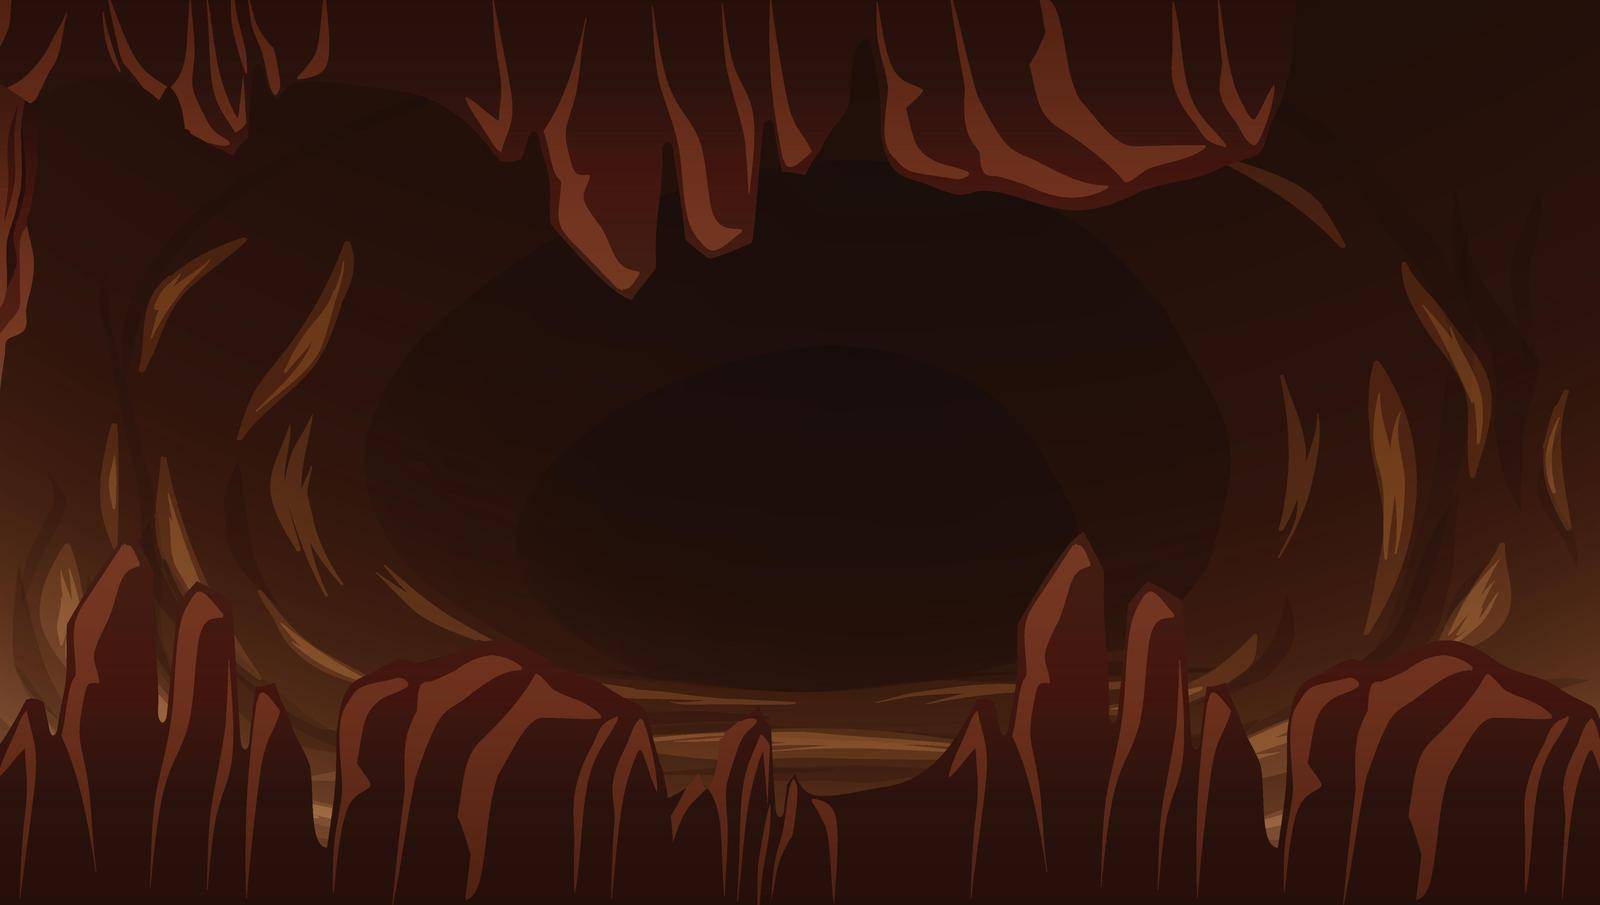 A mystery dark cave illustration